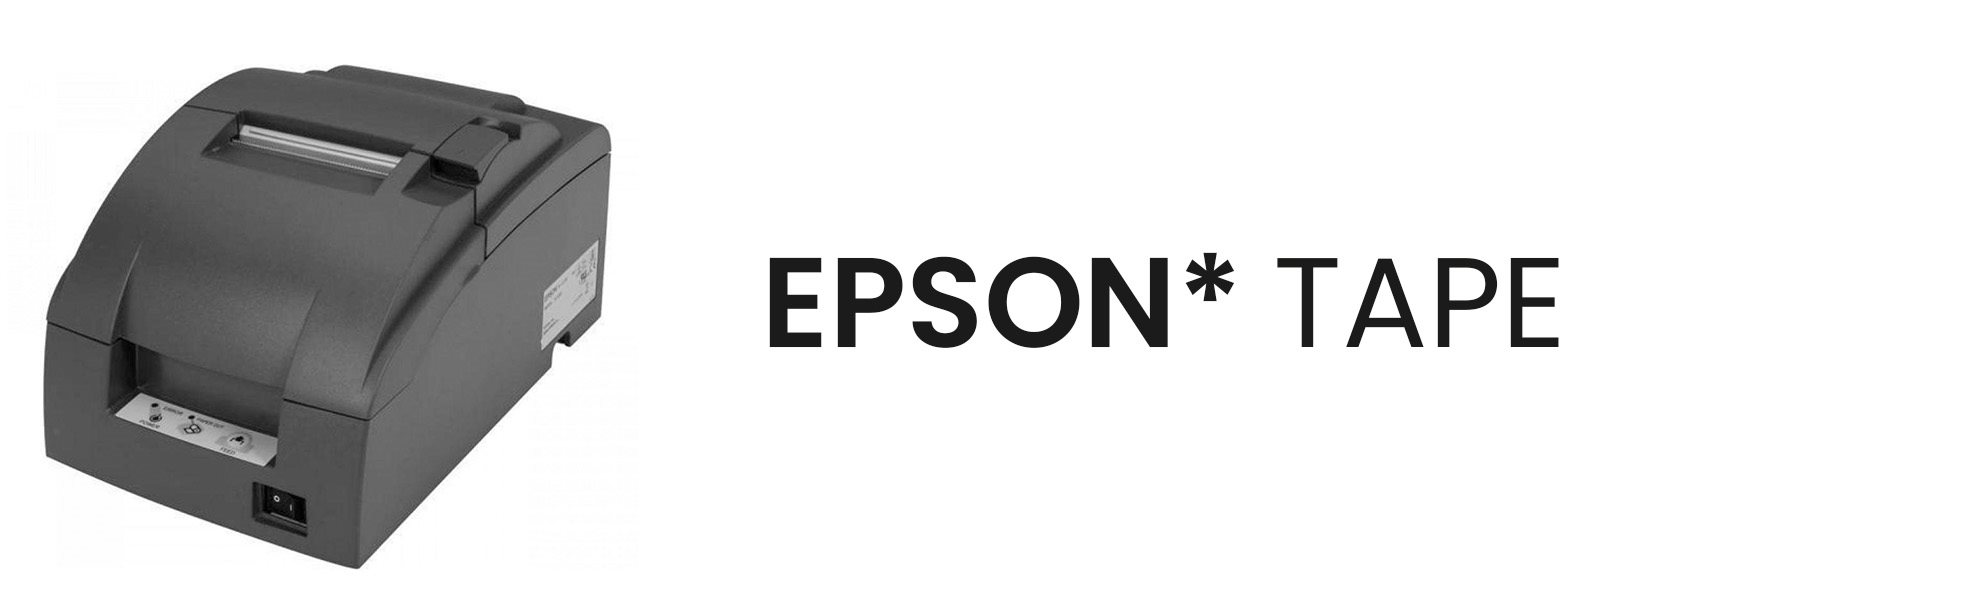 Epson_ ribbon